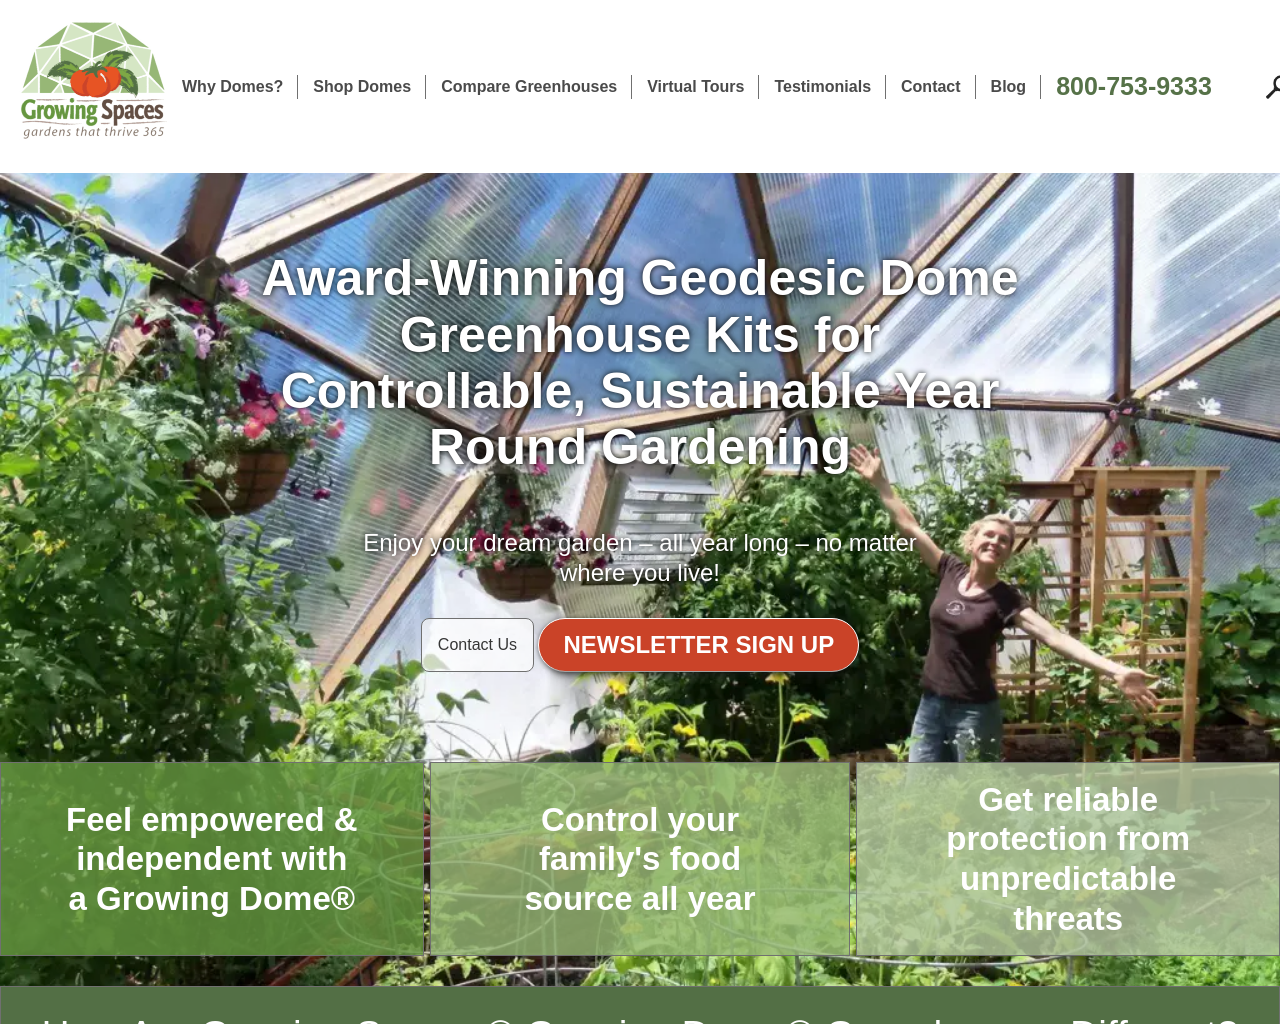 geodesic-greenhouse-kits.com